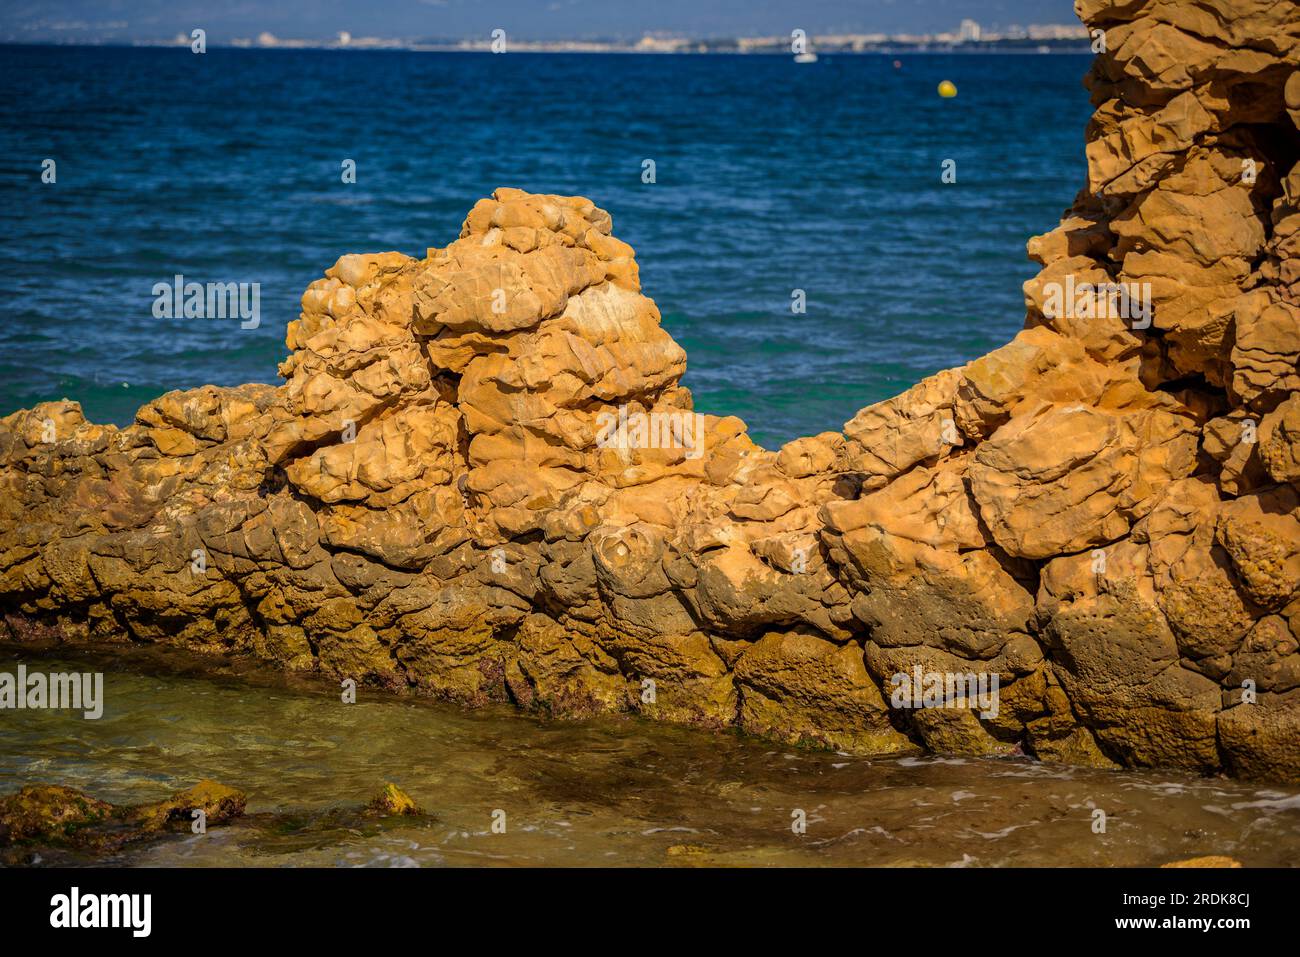 Cliff that gives its name to the Cala de la Penya Tallada cove in Salou, on the Costa Dauada coast (Tarragona, Catalonia, Spain) Stock Photo